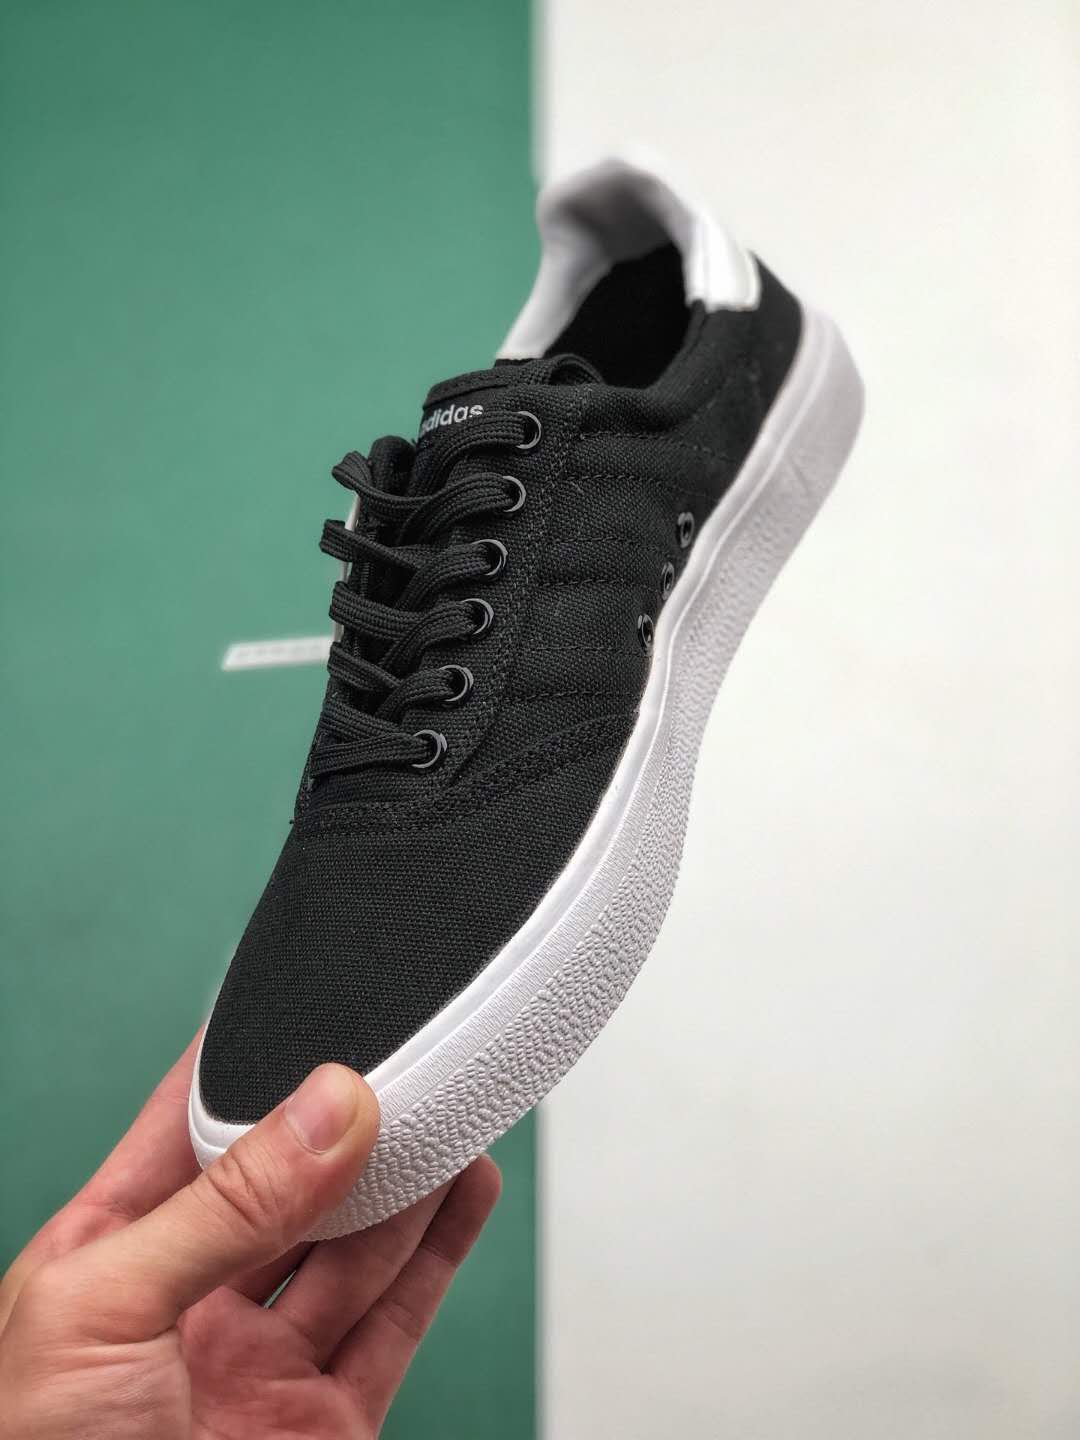 Adidas 3MC Vulc Core Black B22706 - Stylish Skate Shoes for All-Day Comfort